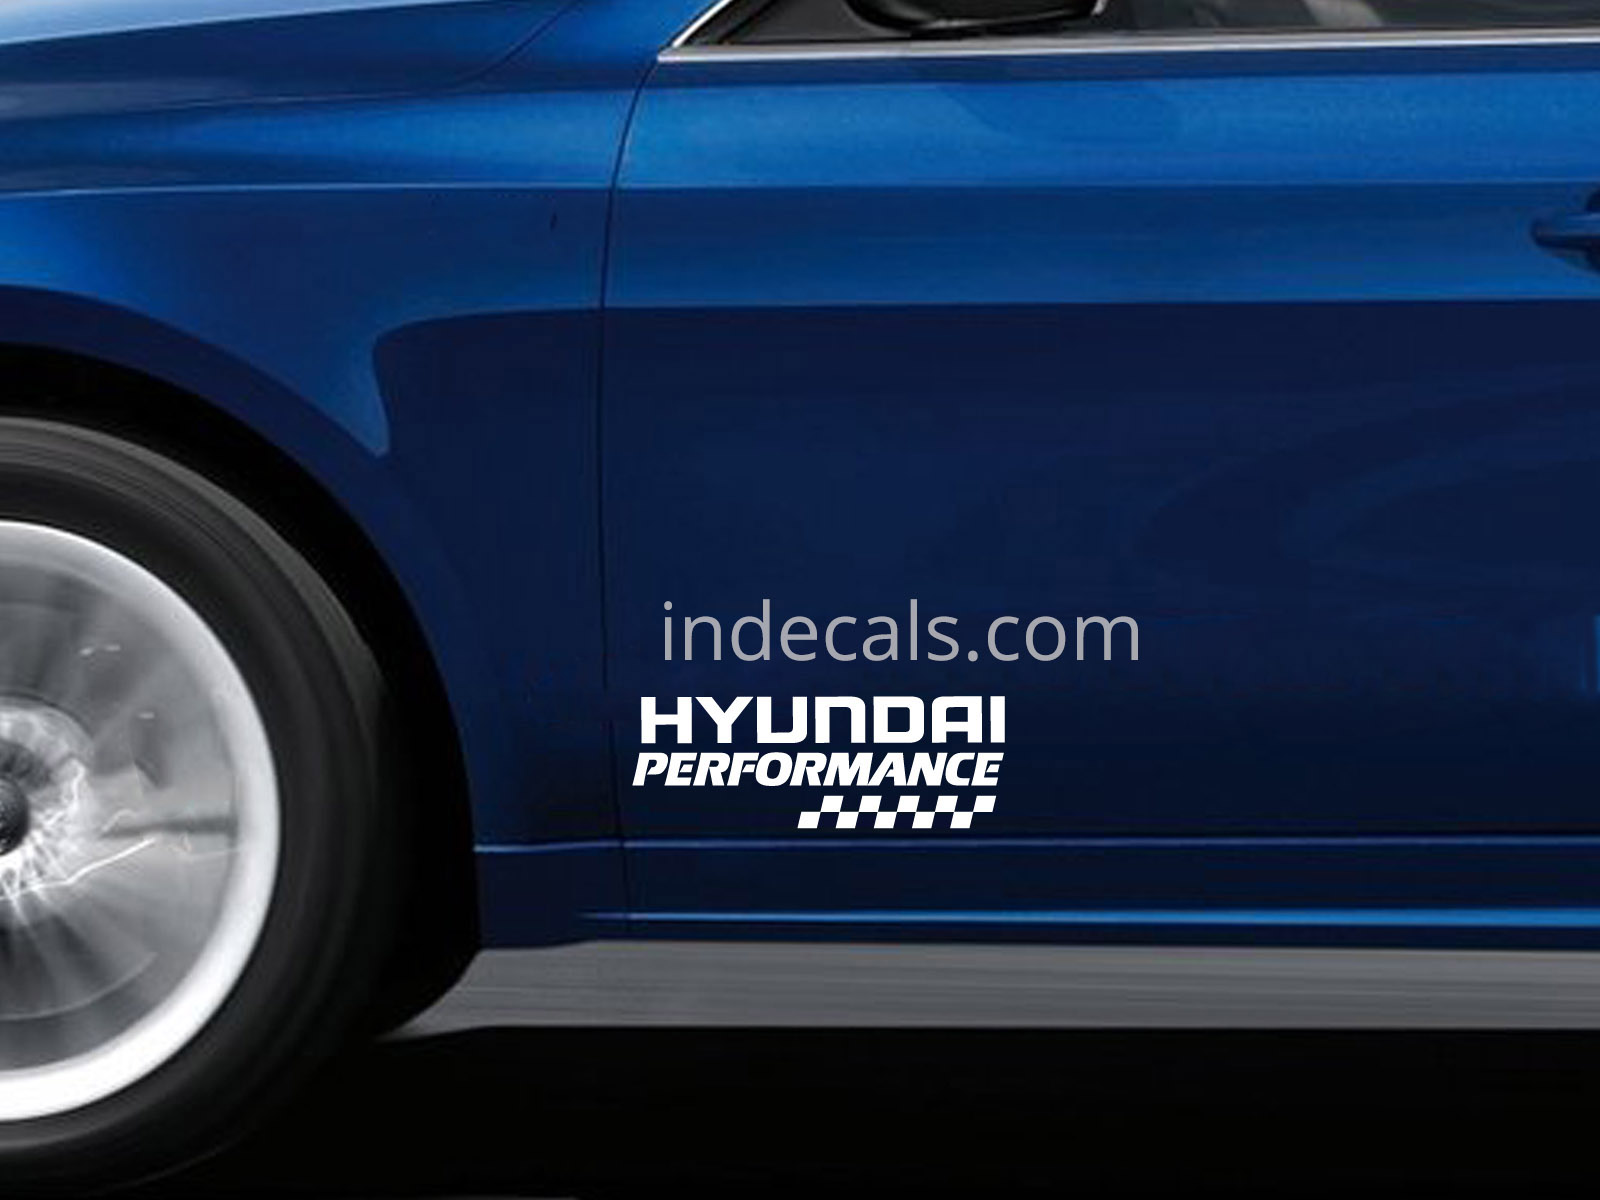 2 x Hyundai Performance Stickers for Doors - White